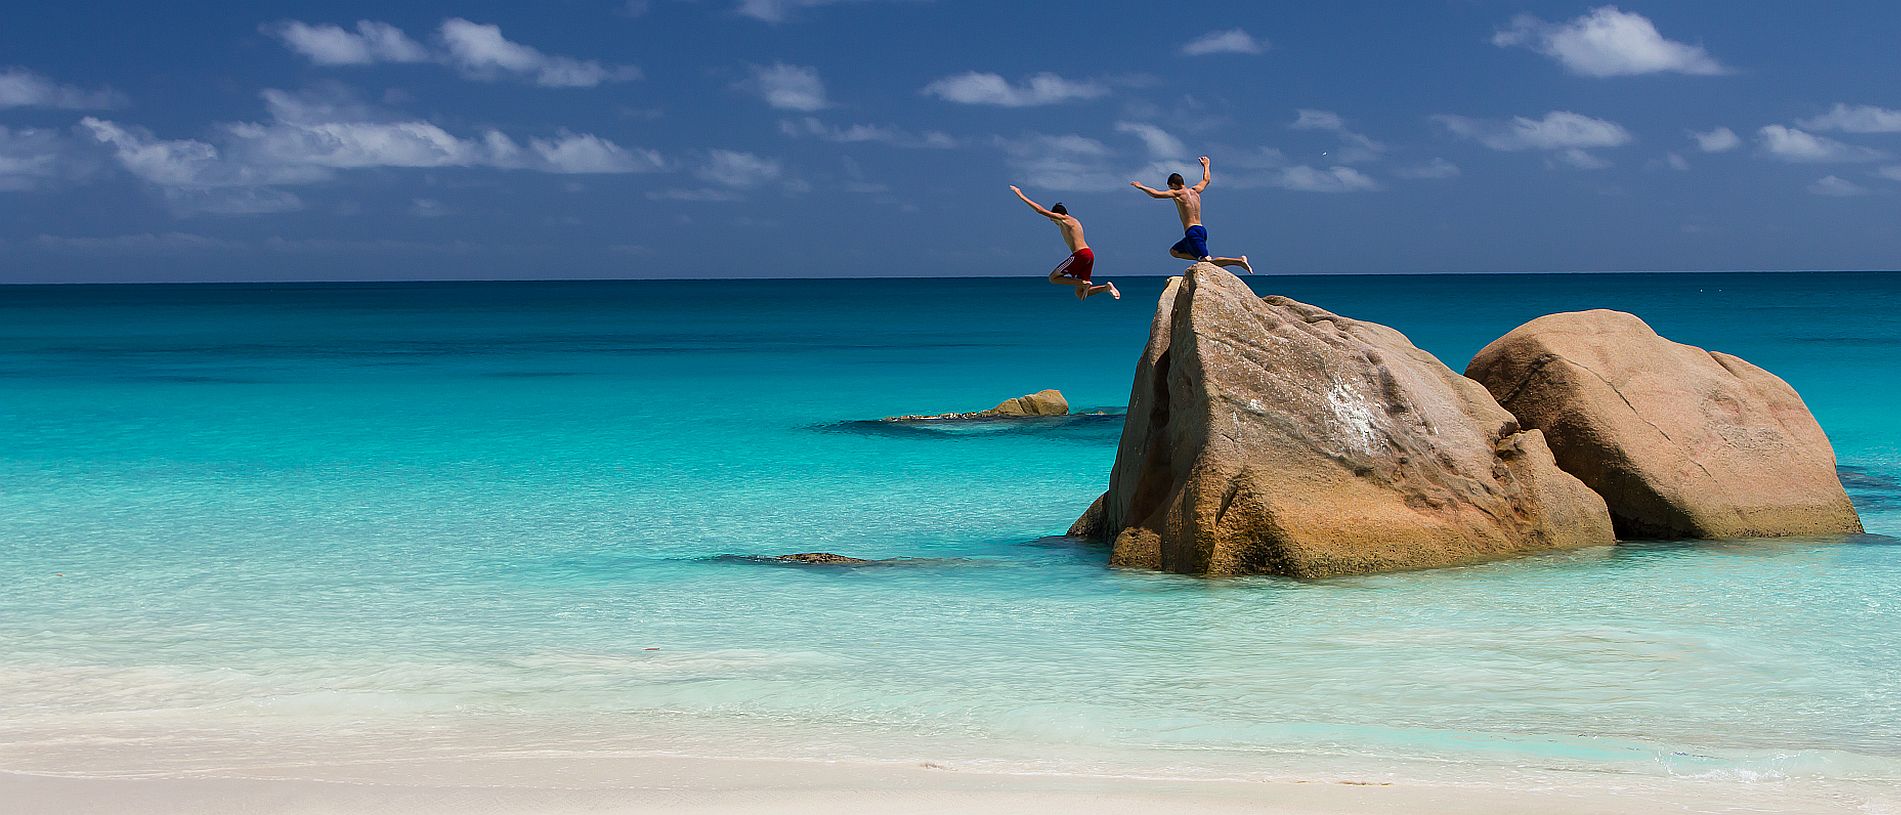 Seychelles holidays - kids jumping off rocks